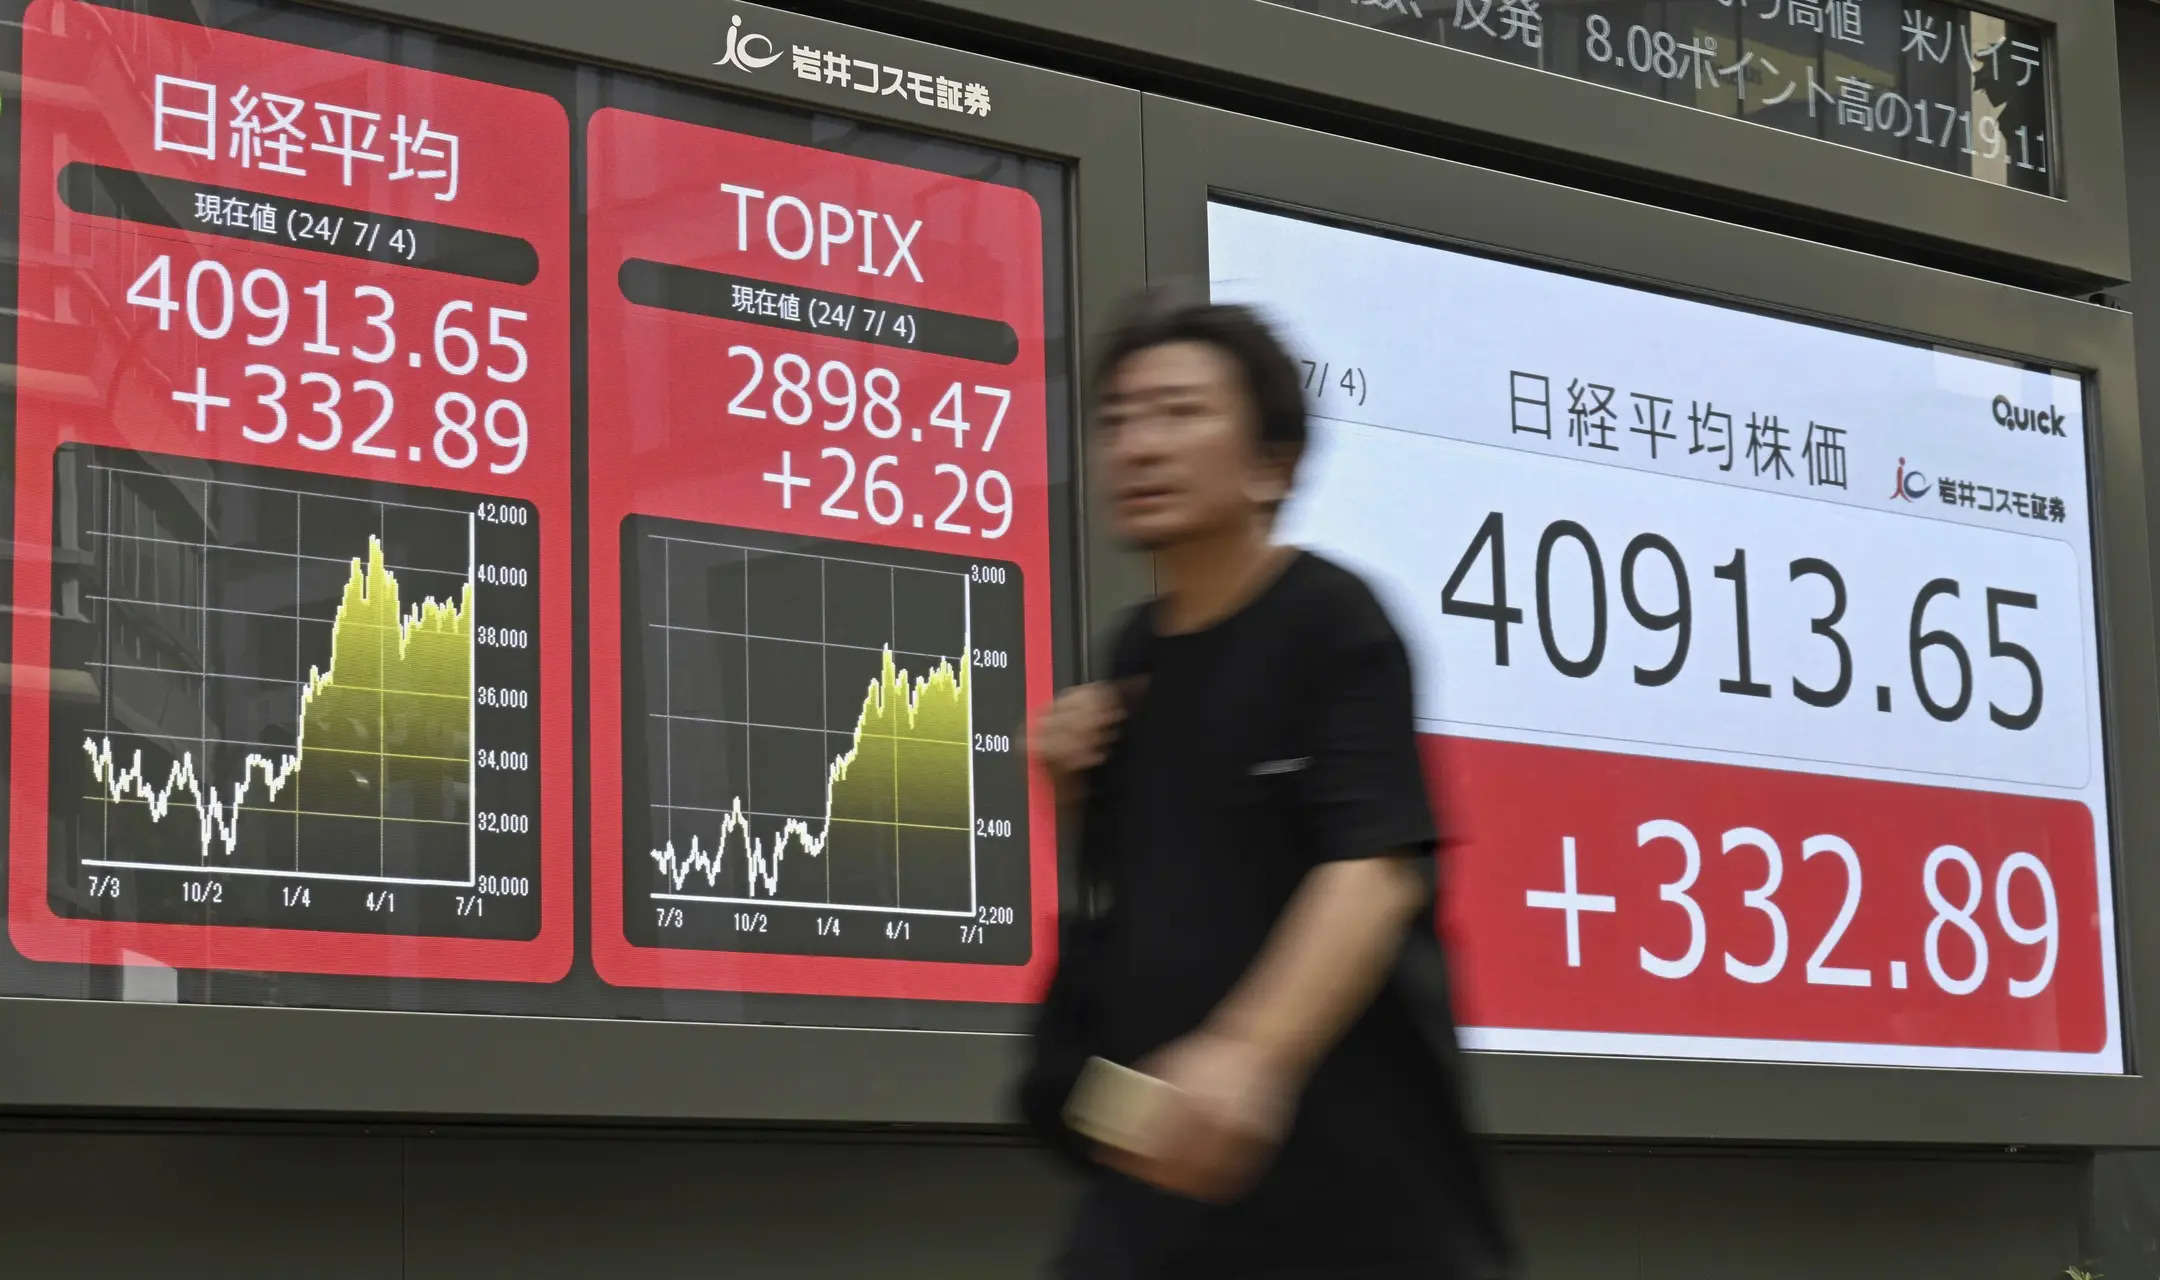 Japanese Stocks, Bonds Fall Ahead of BOJ Decision: Markets wrap 